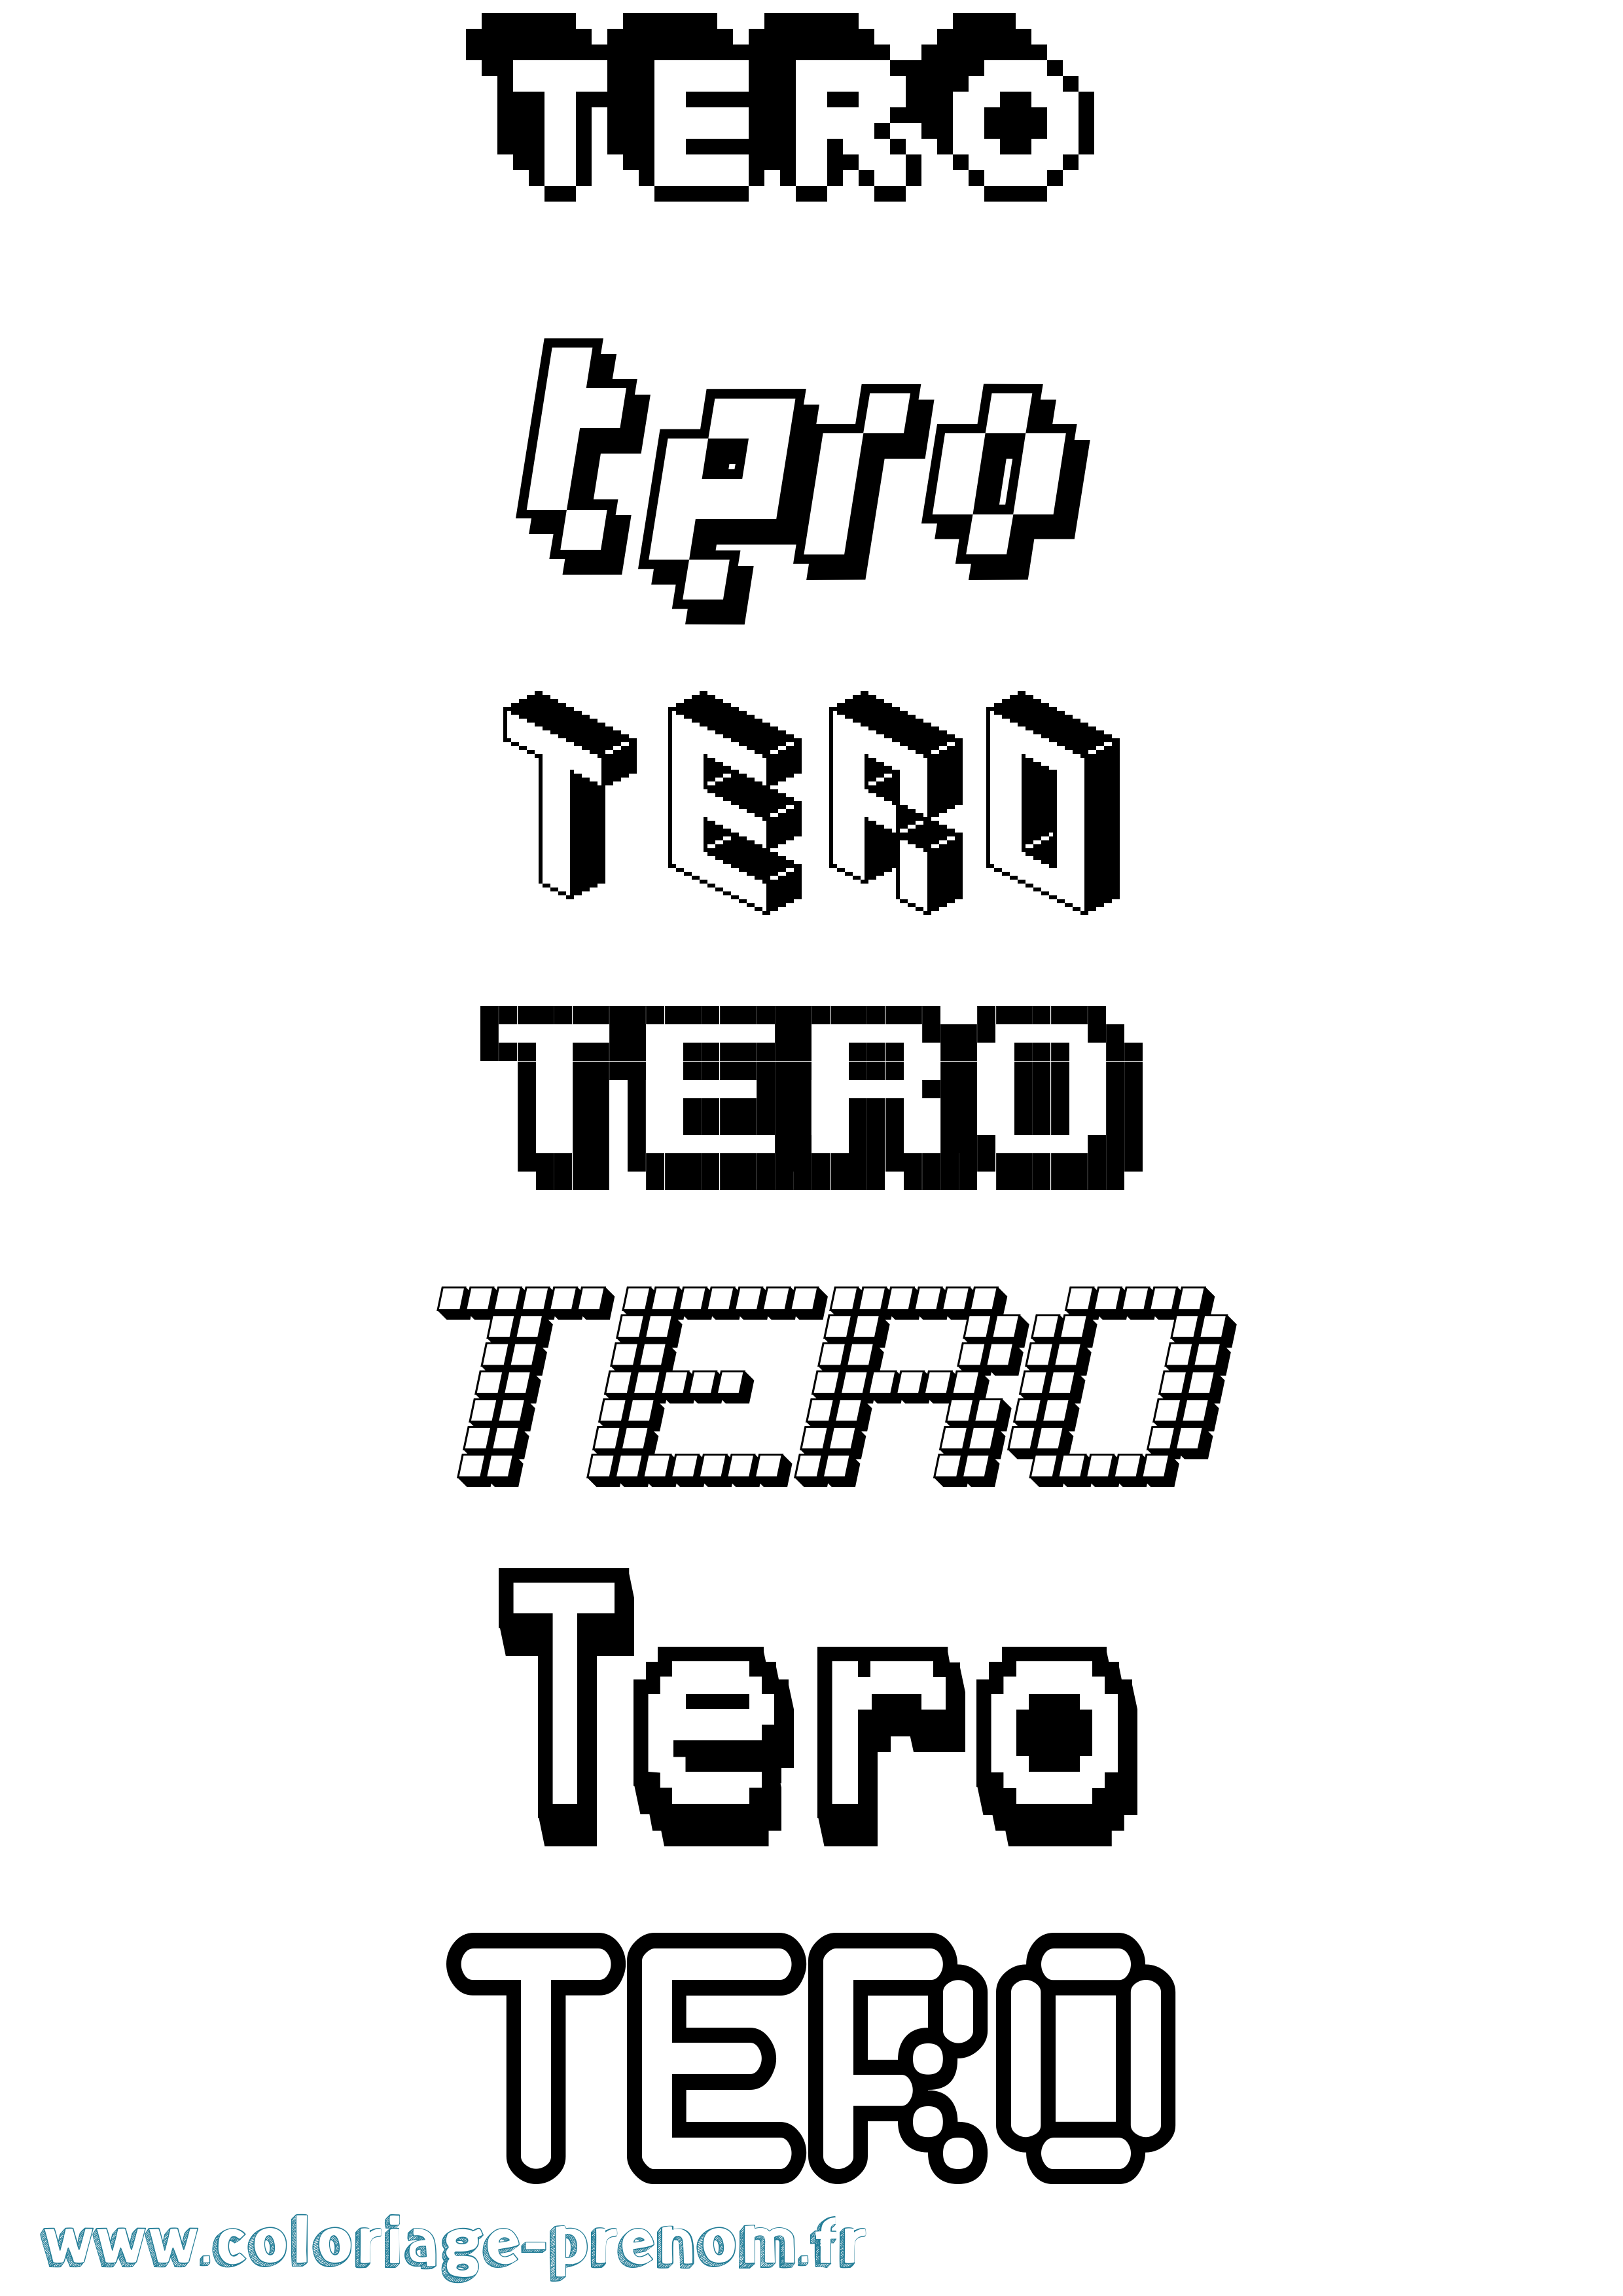 Coloriage prénom Tero Pixel